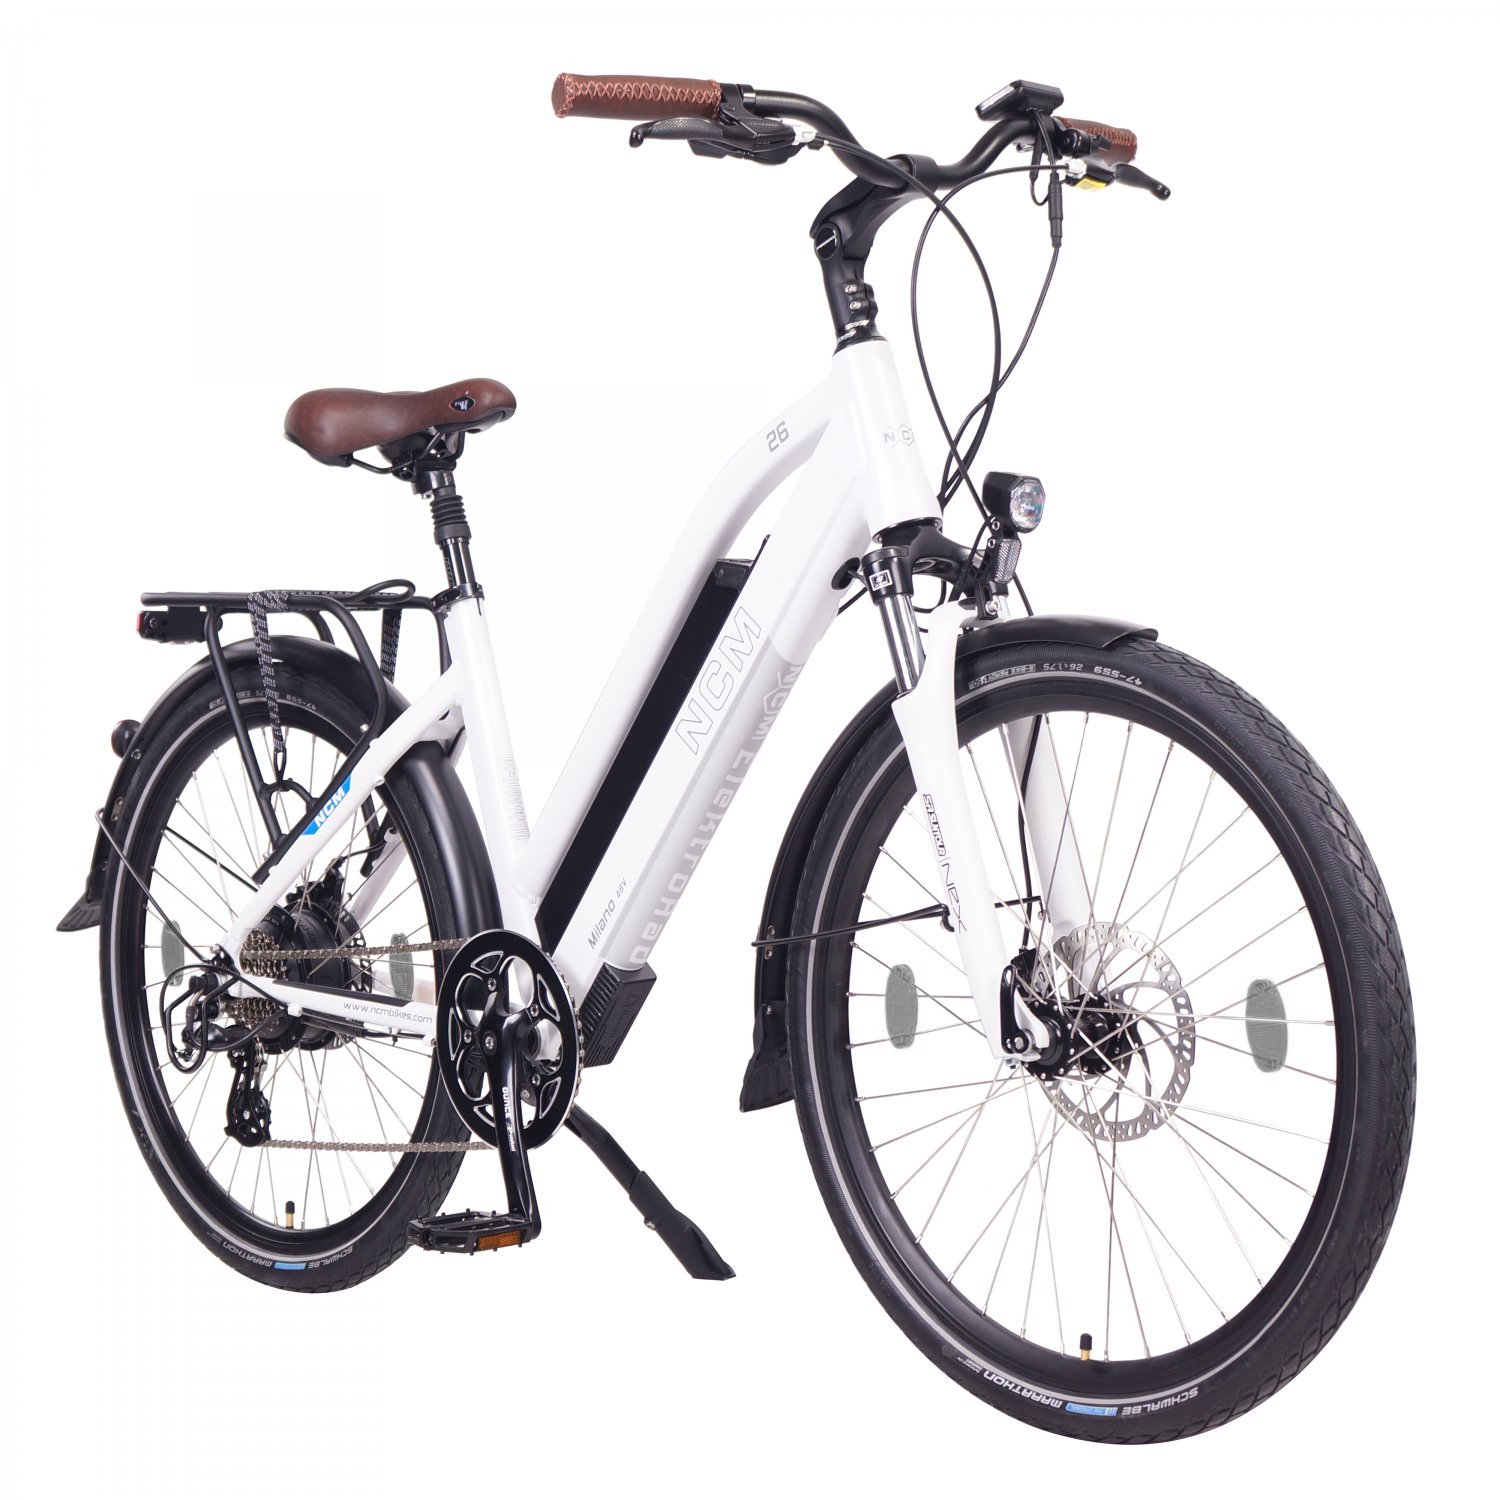 photo of the ncm milano electric bike